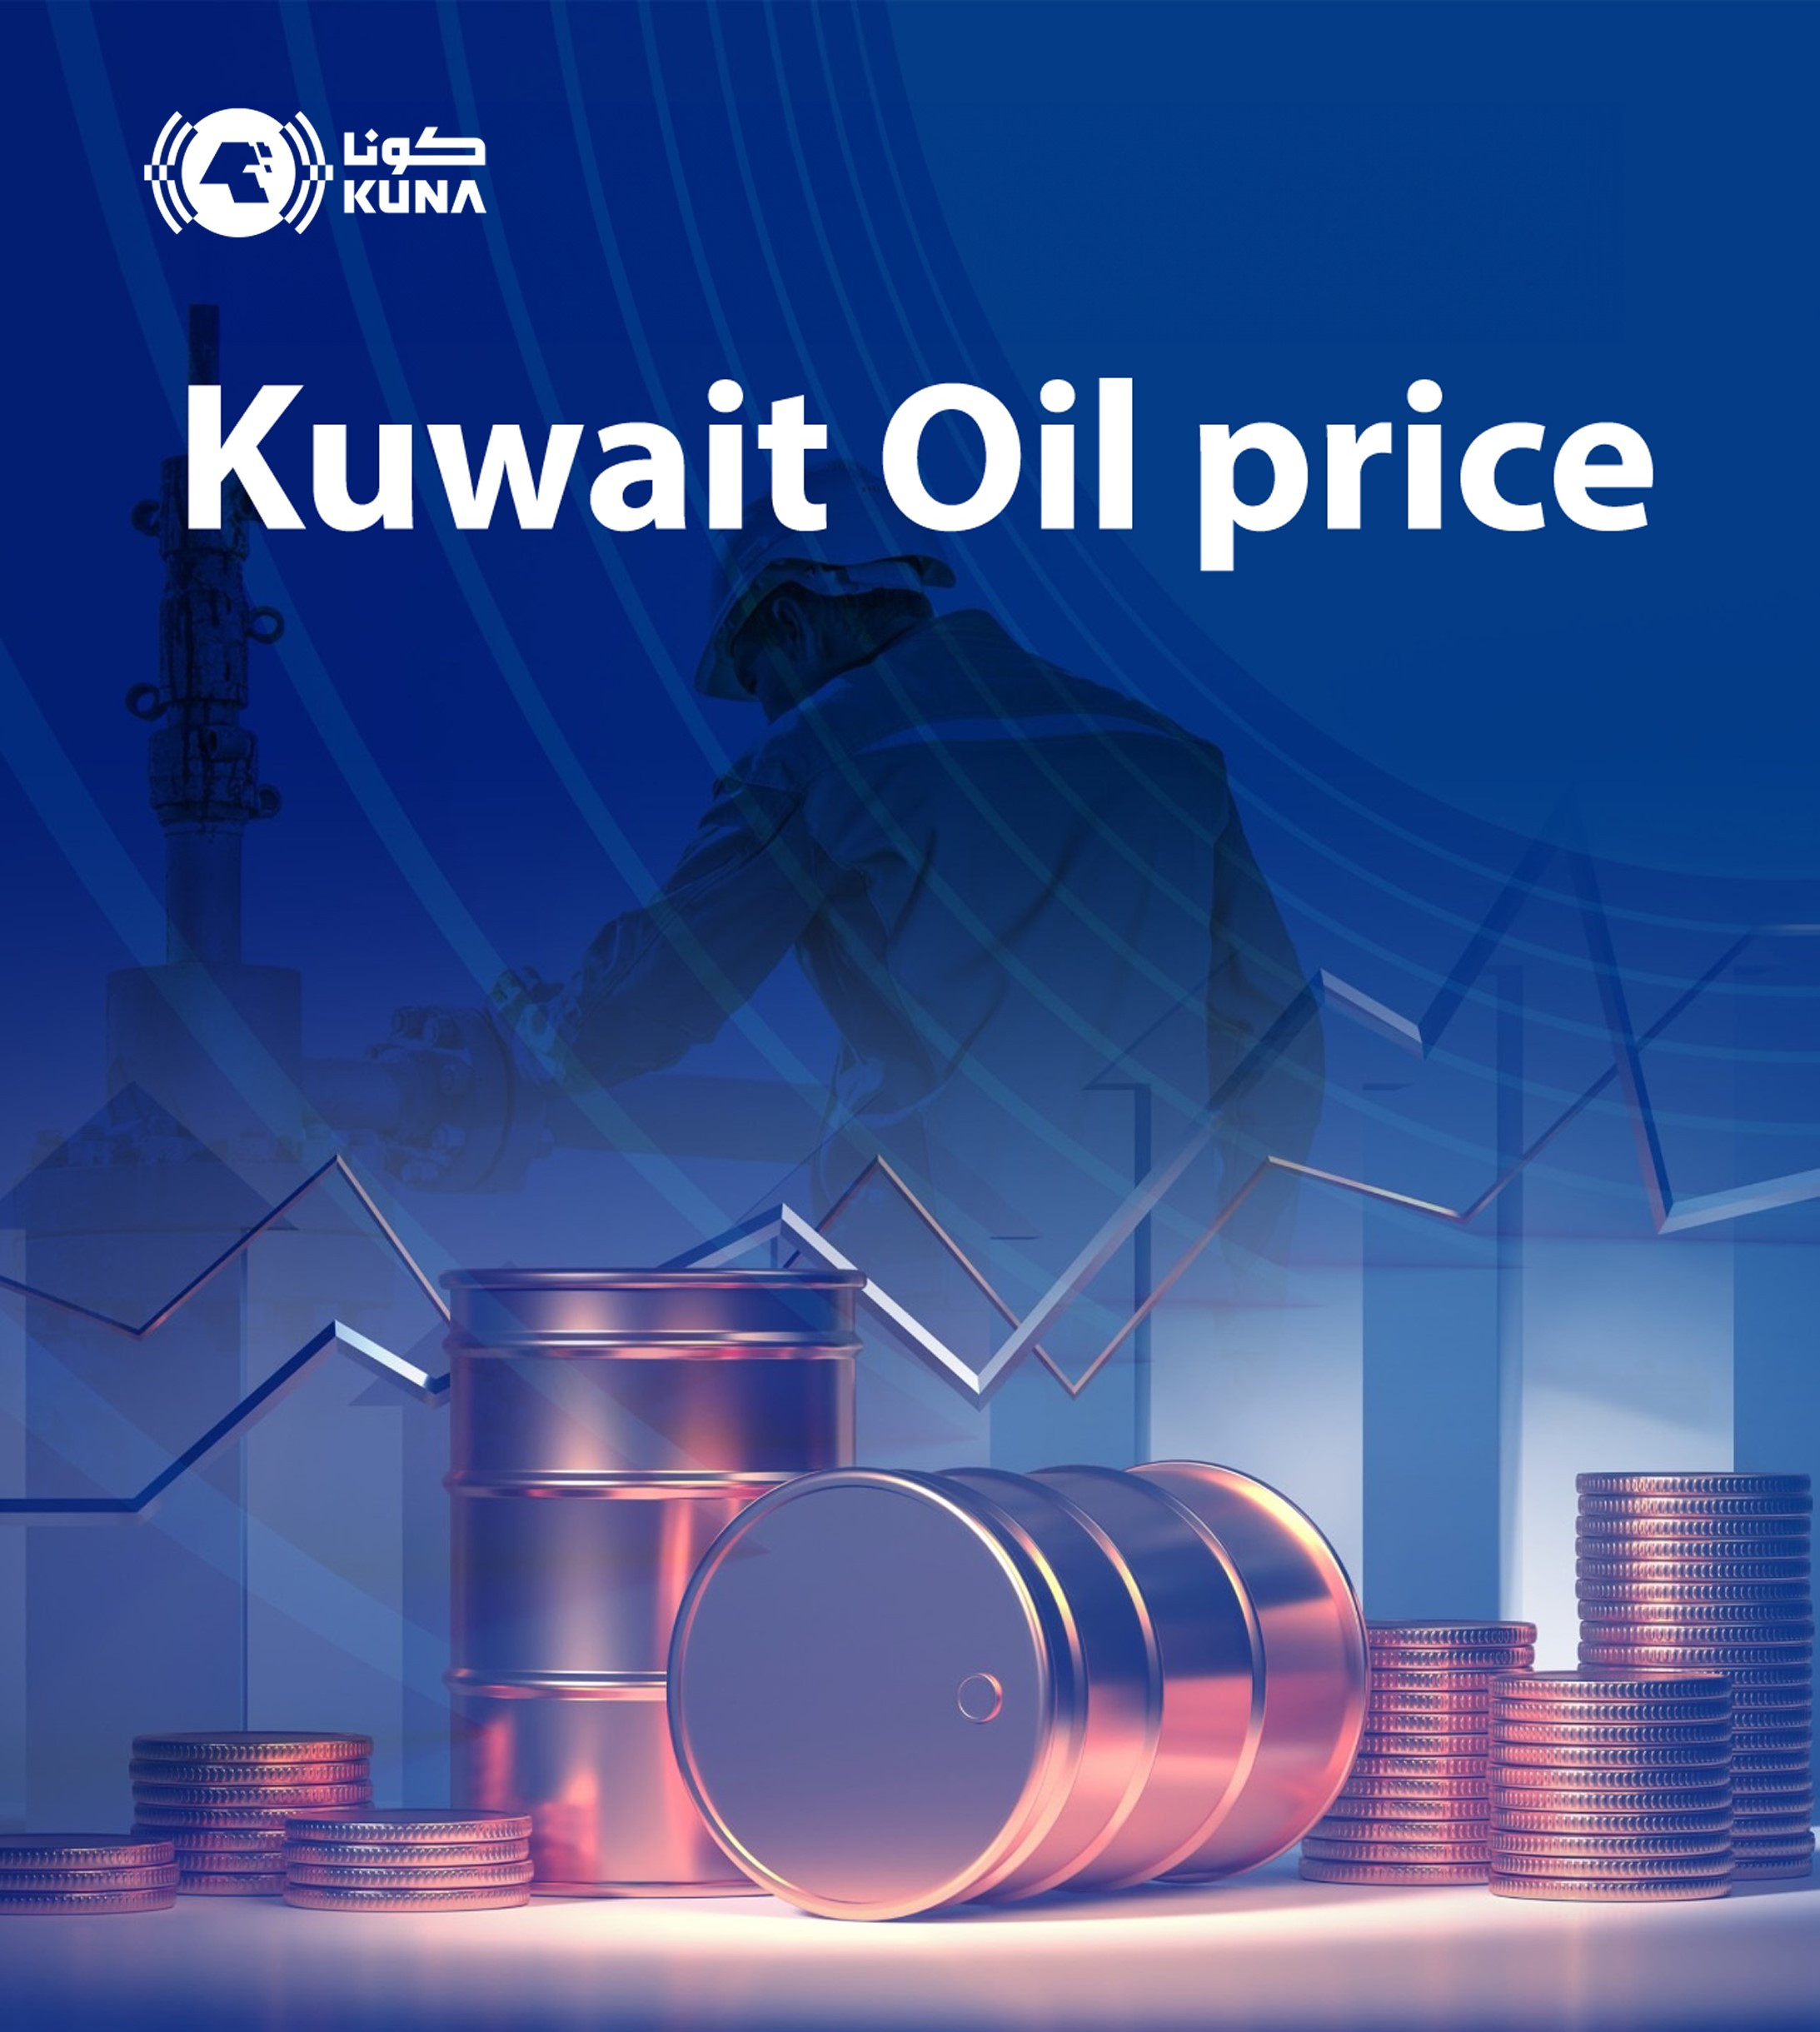 Kuwait oil price up 59 cents USD 86.33 pb                                                                                                                                                                                                                 